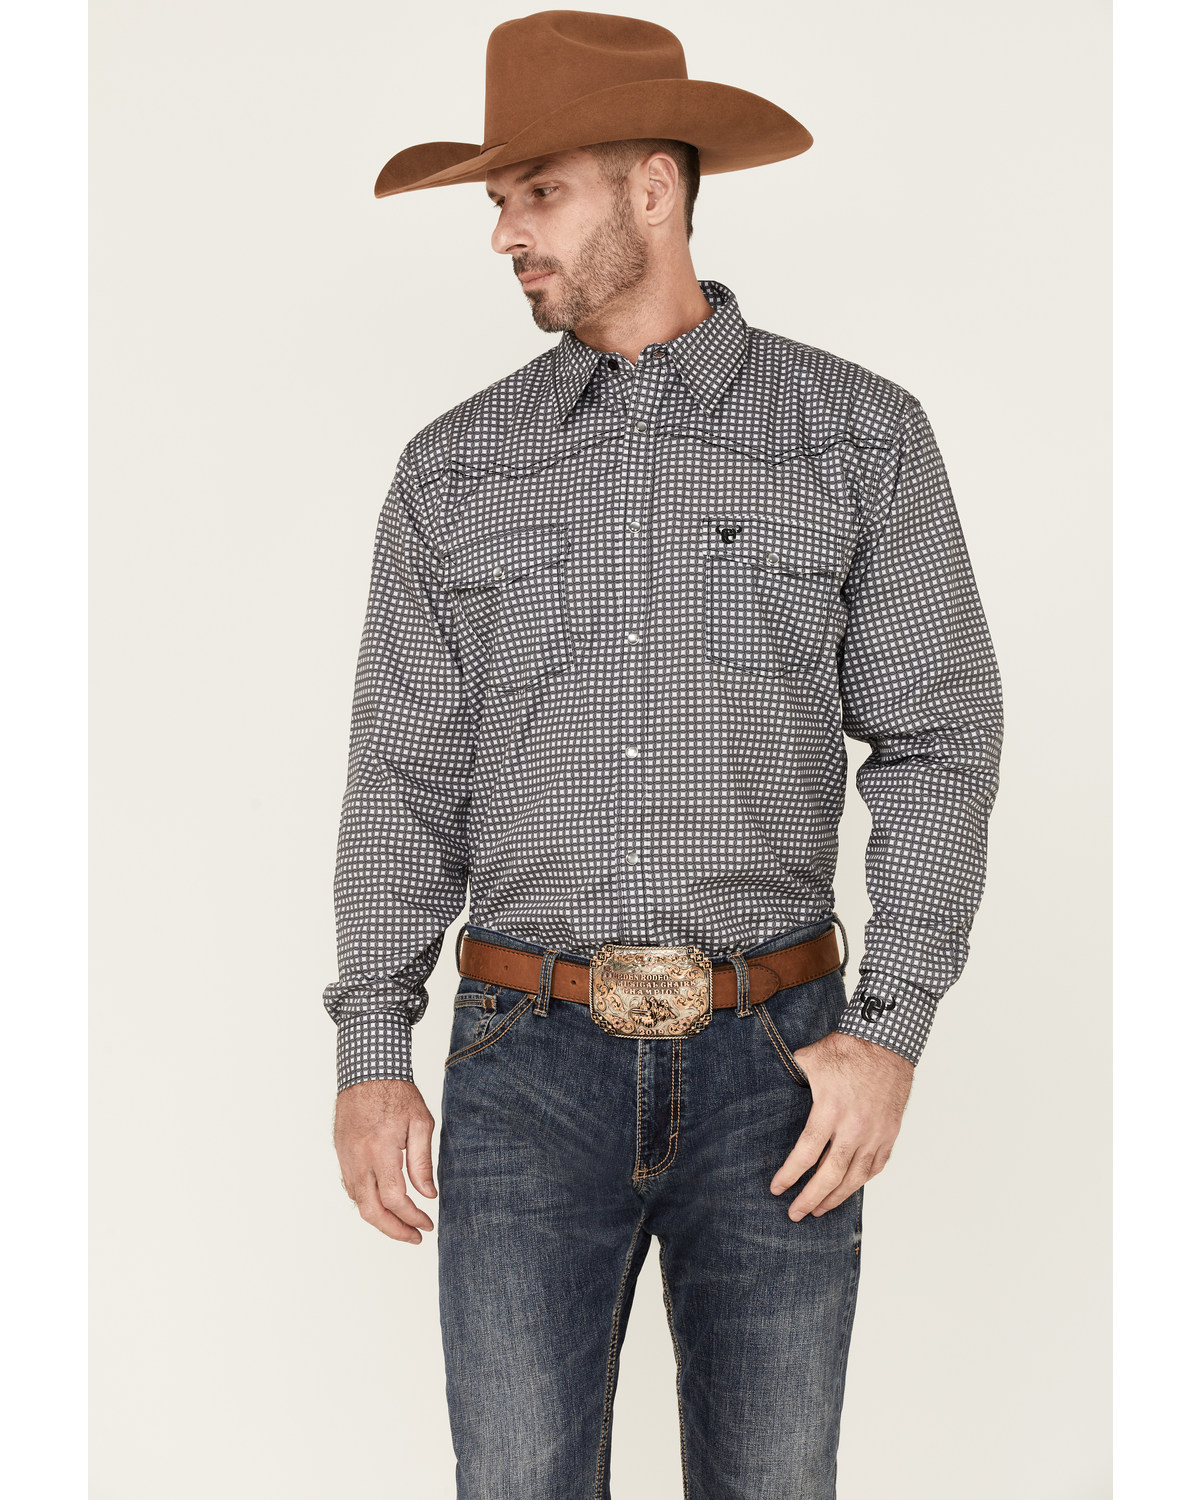 Cowboy Hardware Men's Wavy Square Geo Print Long Sleeve Pearl Snap Western Shirt